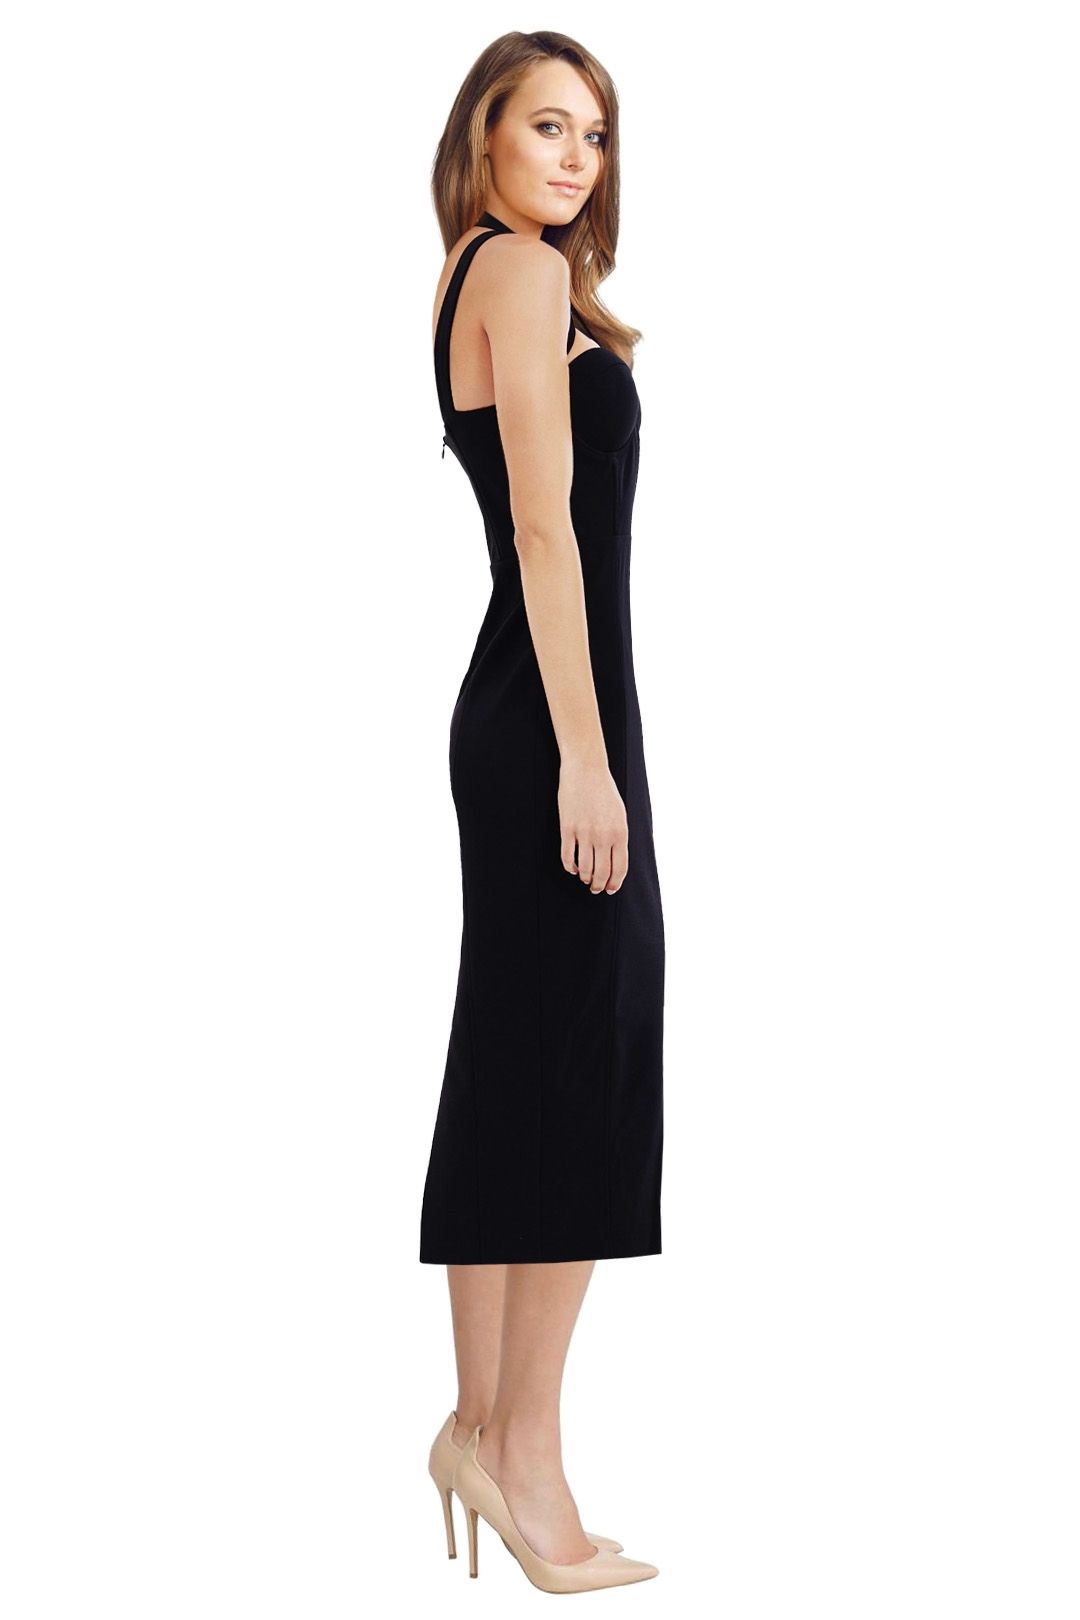 Misha Collection - Lorenza Dress - Black - Side